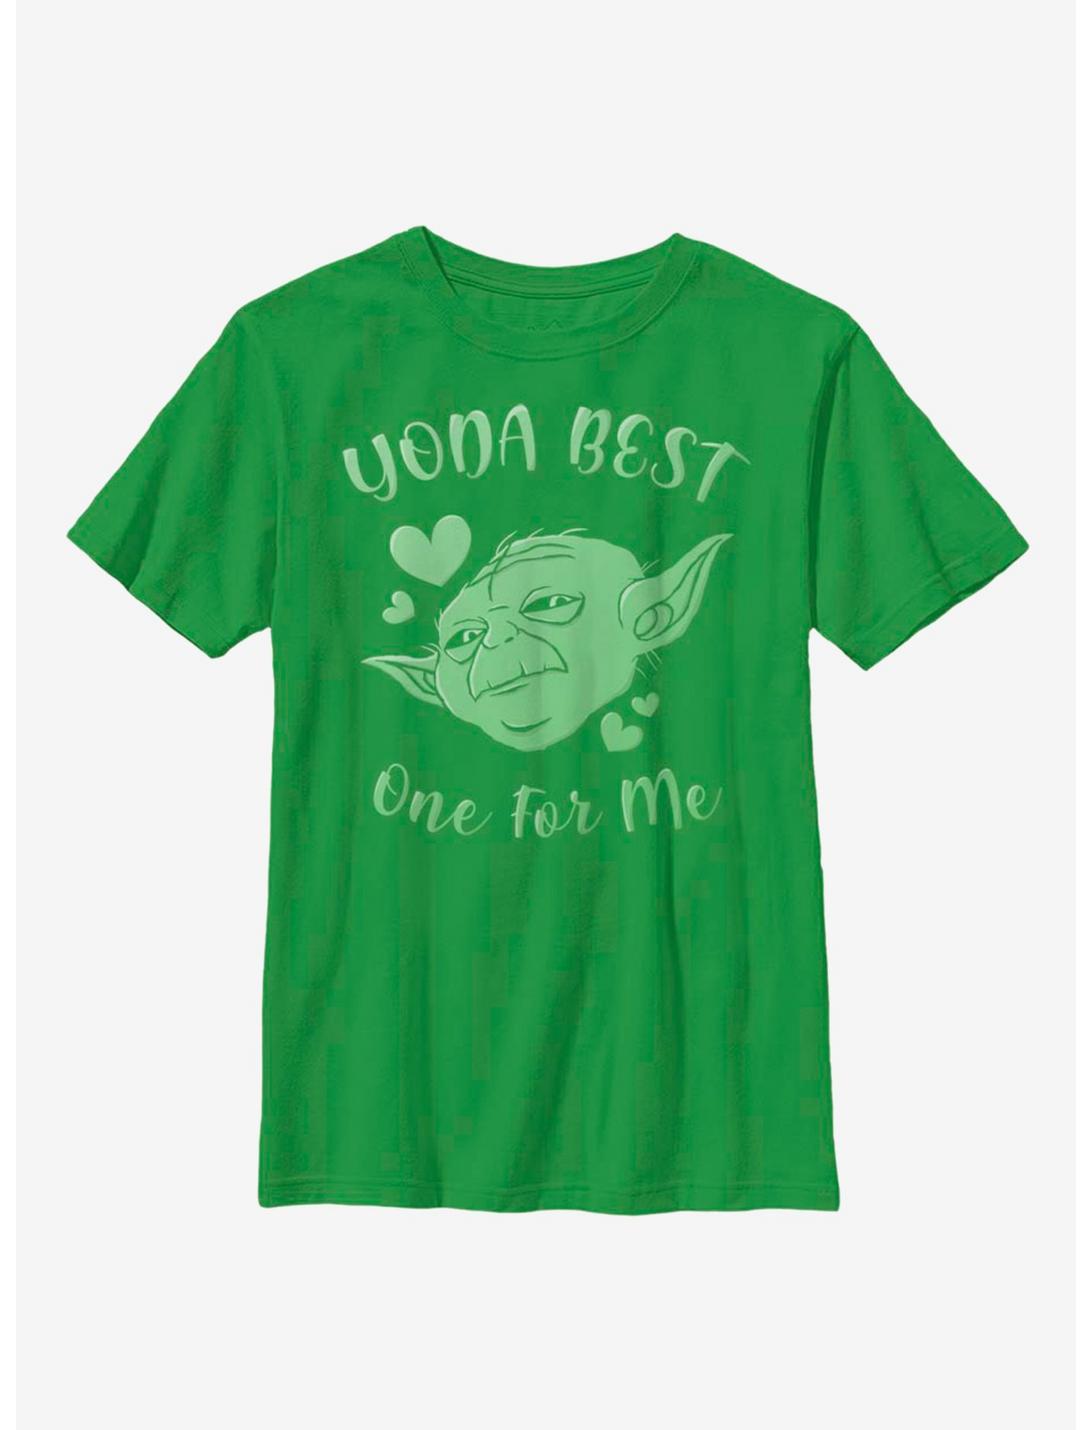 Star Wars Yoda Best Hearts Youth T-Shirt, KELLY, hi-res